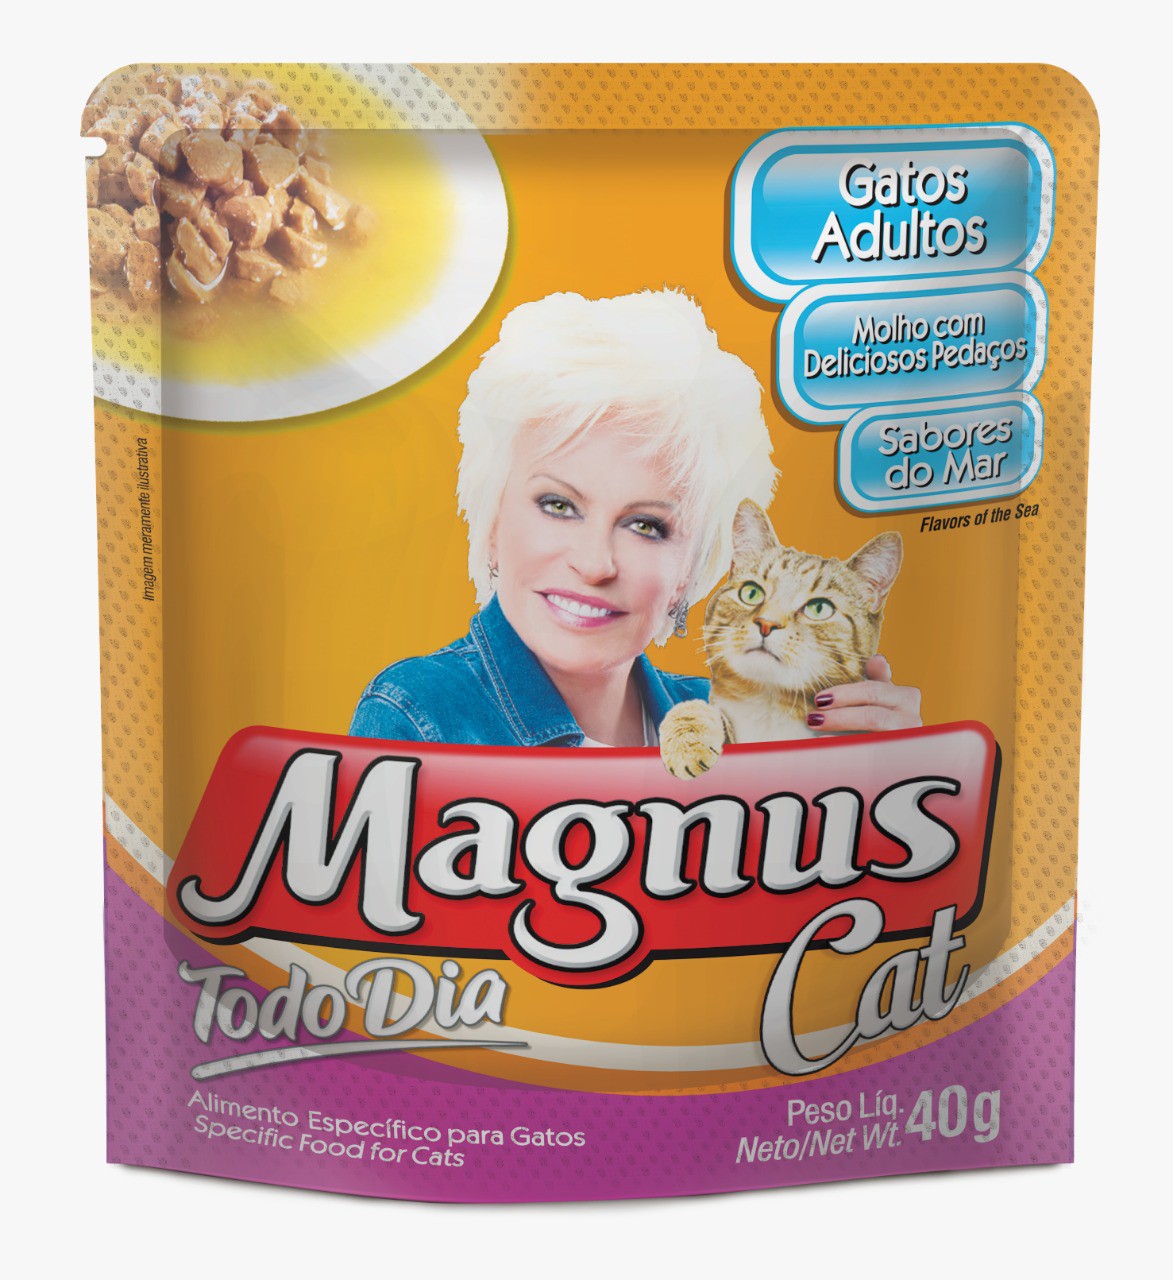 Sachê Magnus Cat Todo Dia Gatos Adultos Sabores Do Mar